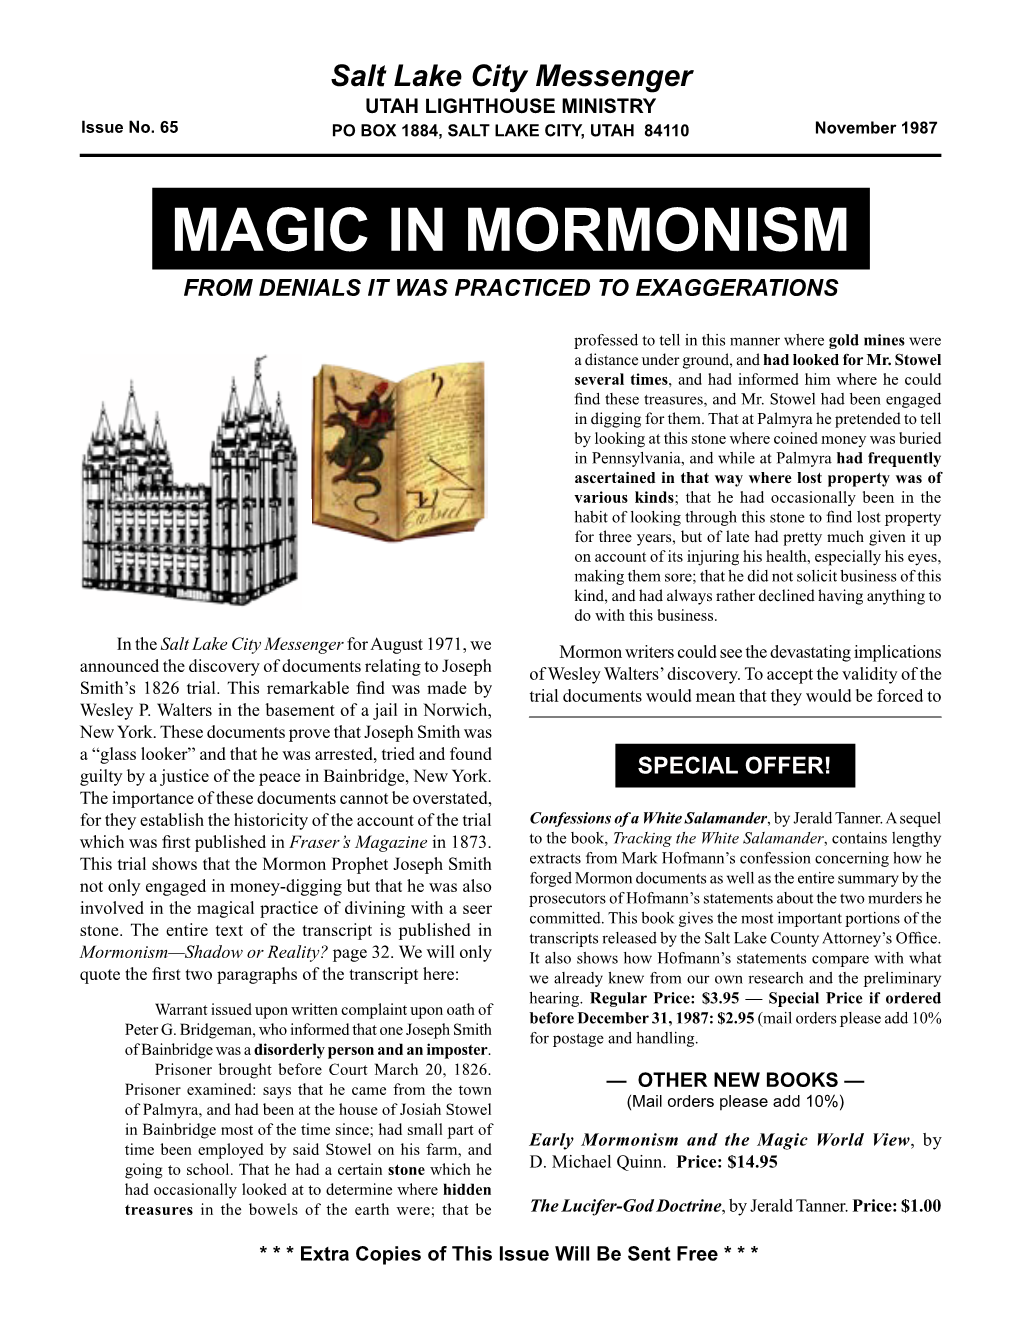 65 Salt Lake City Messenger: Magic in Mormonism